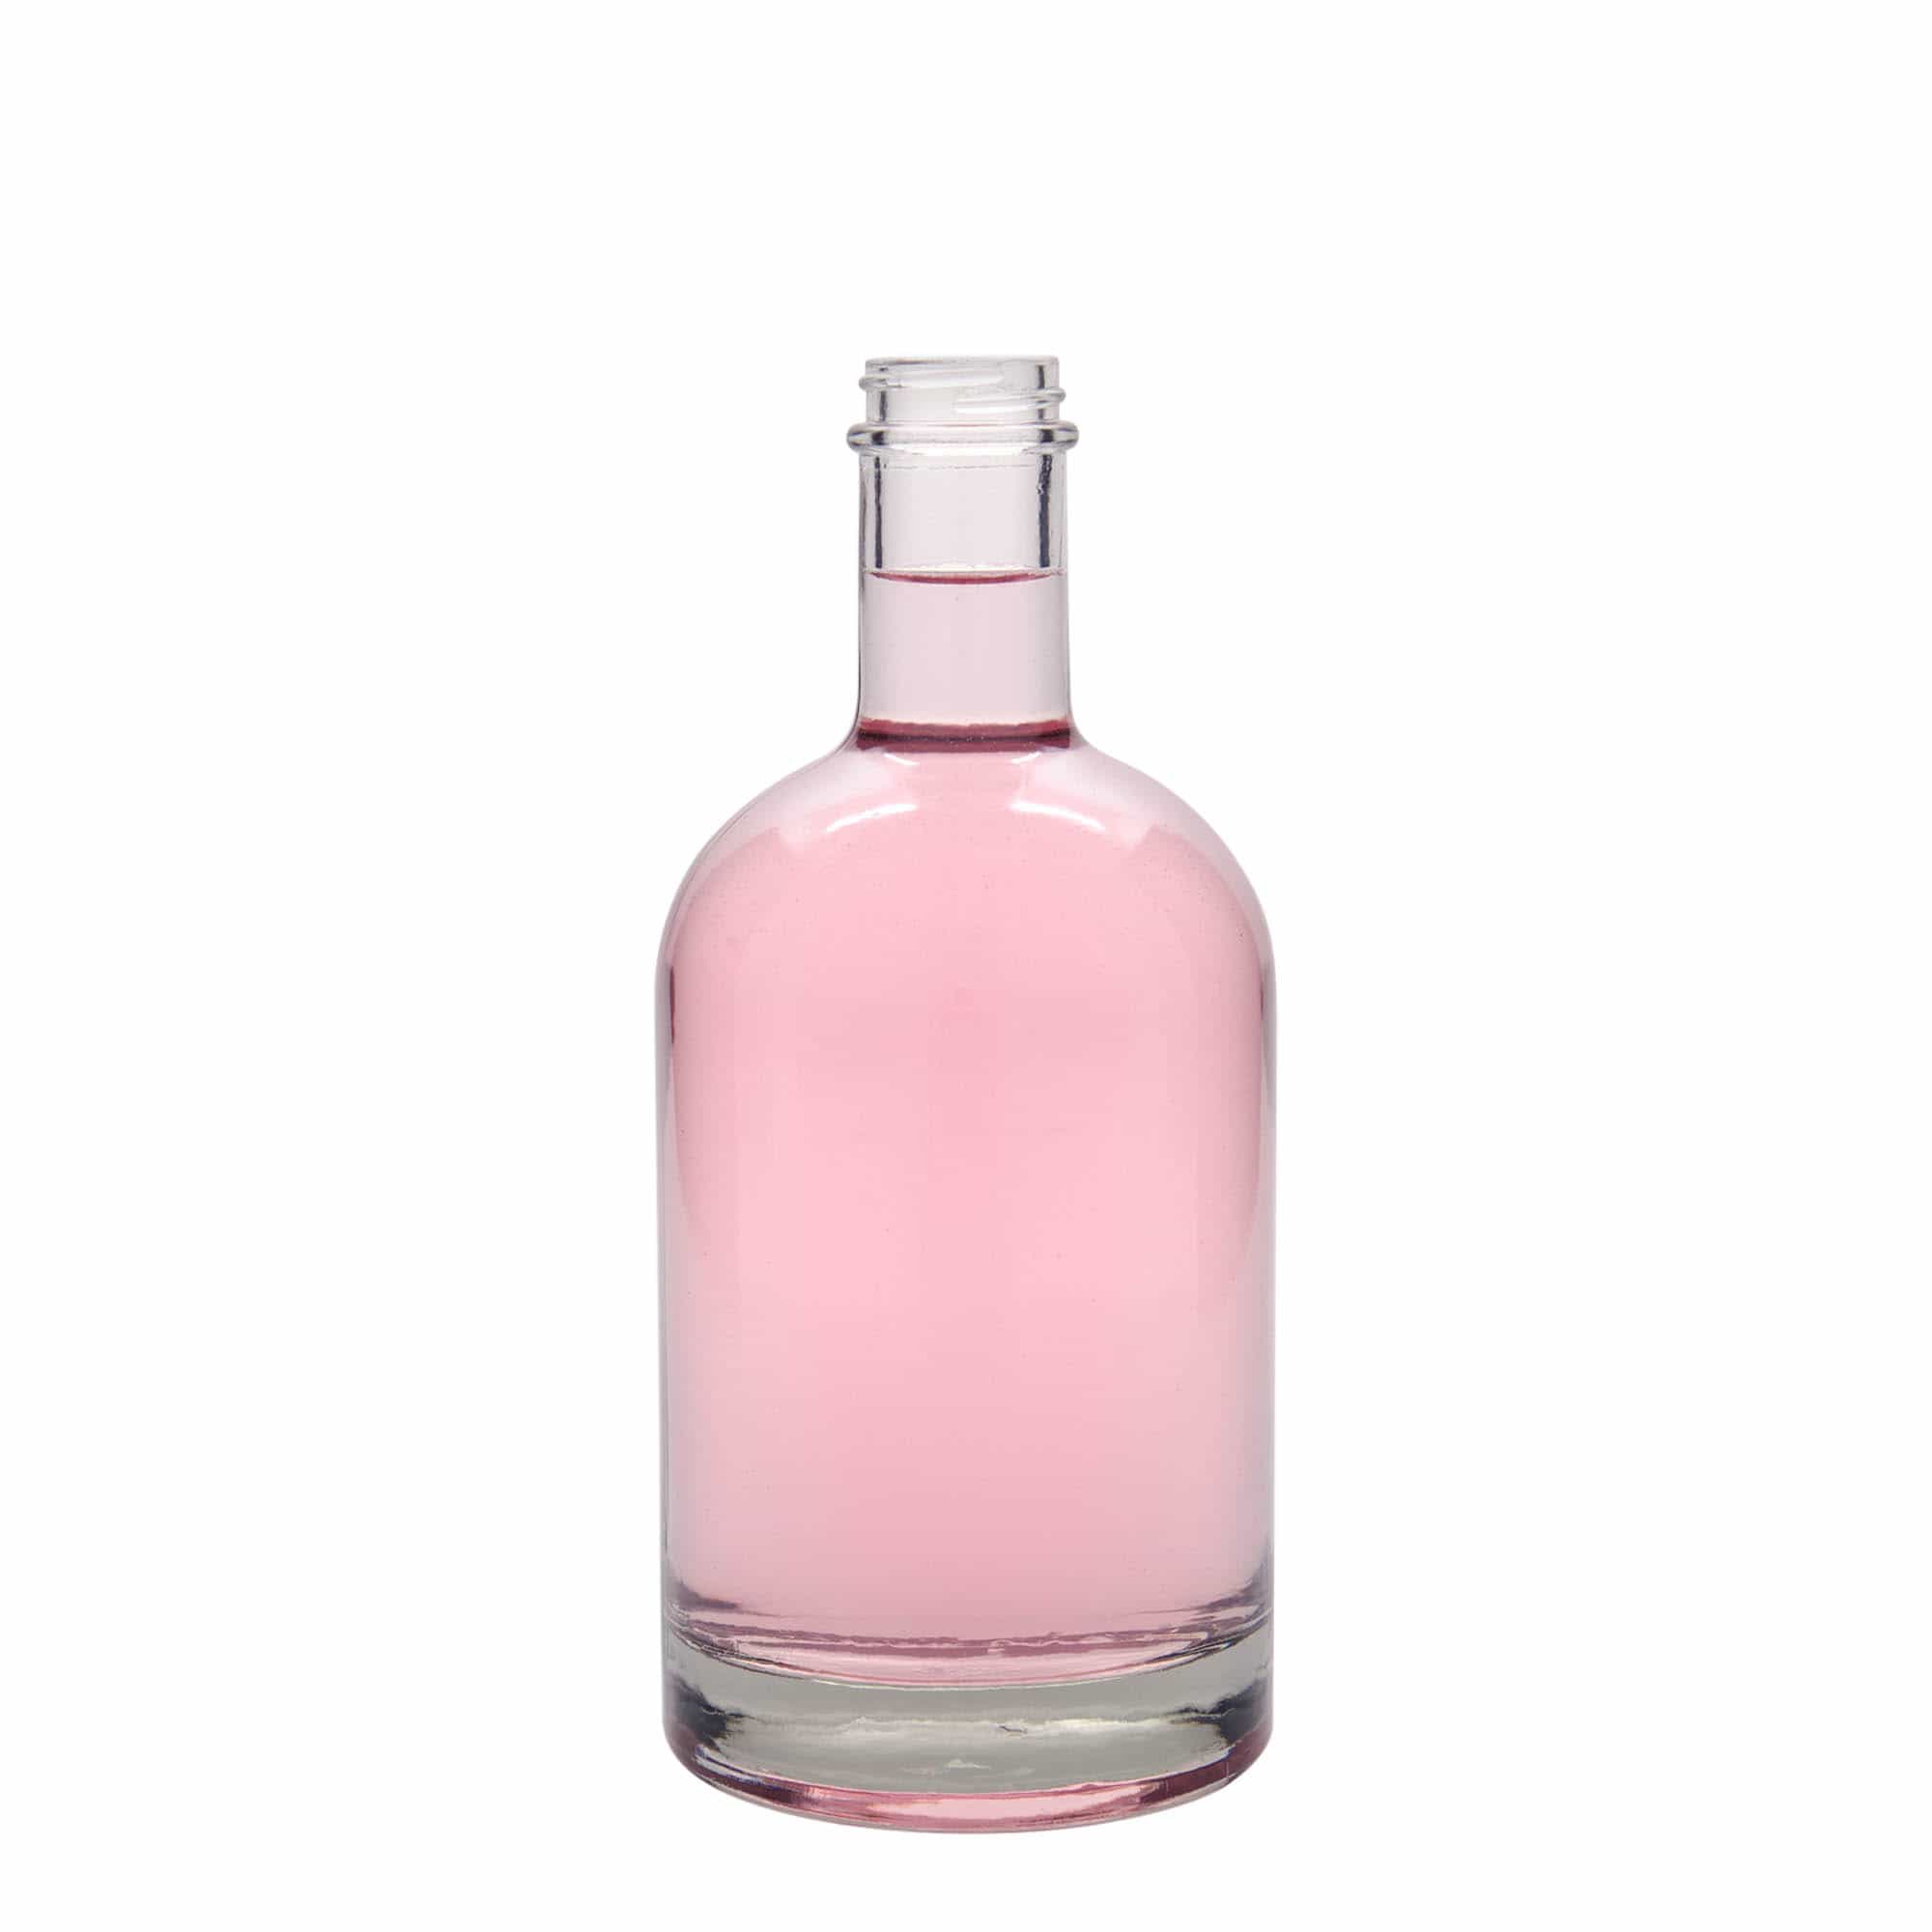 700 ml glass bottle 'First Class', closure: GPI 33